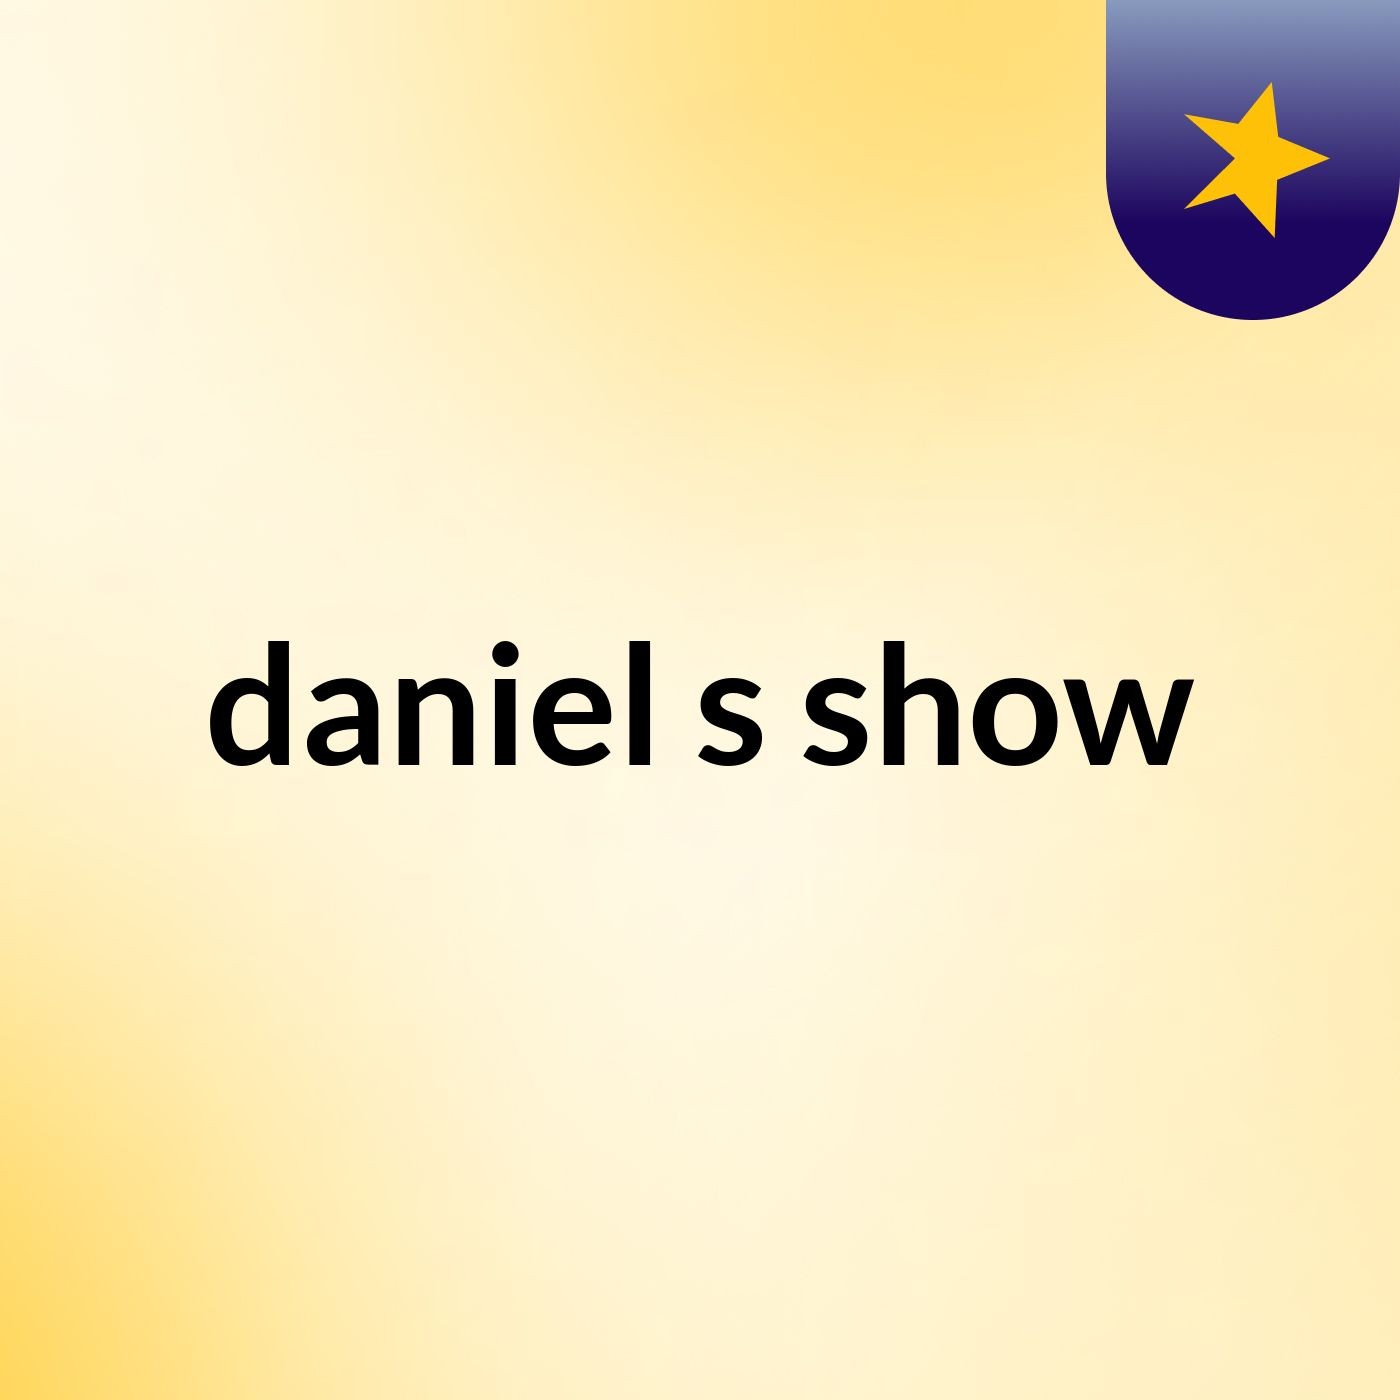 daniel's show